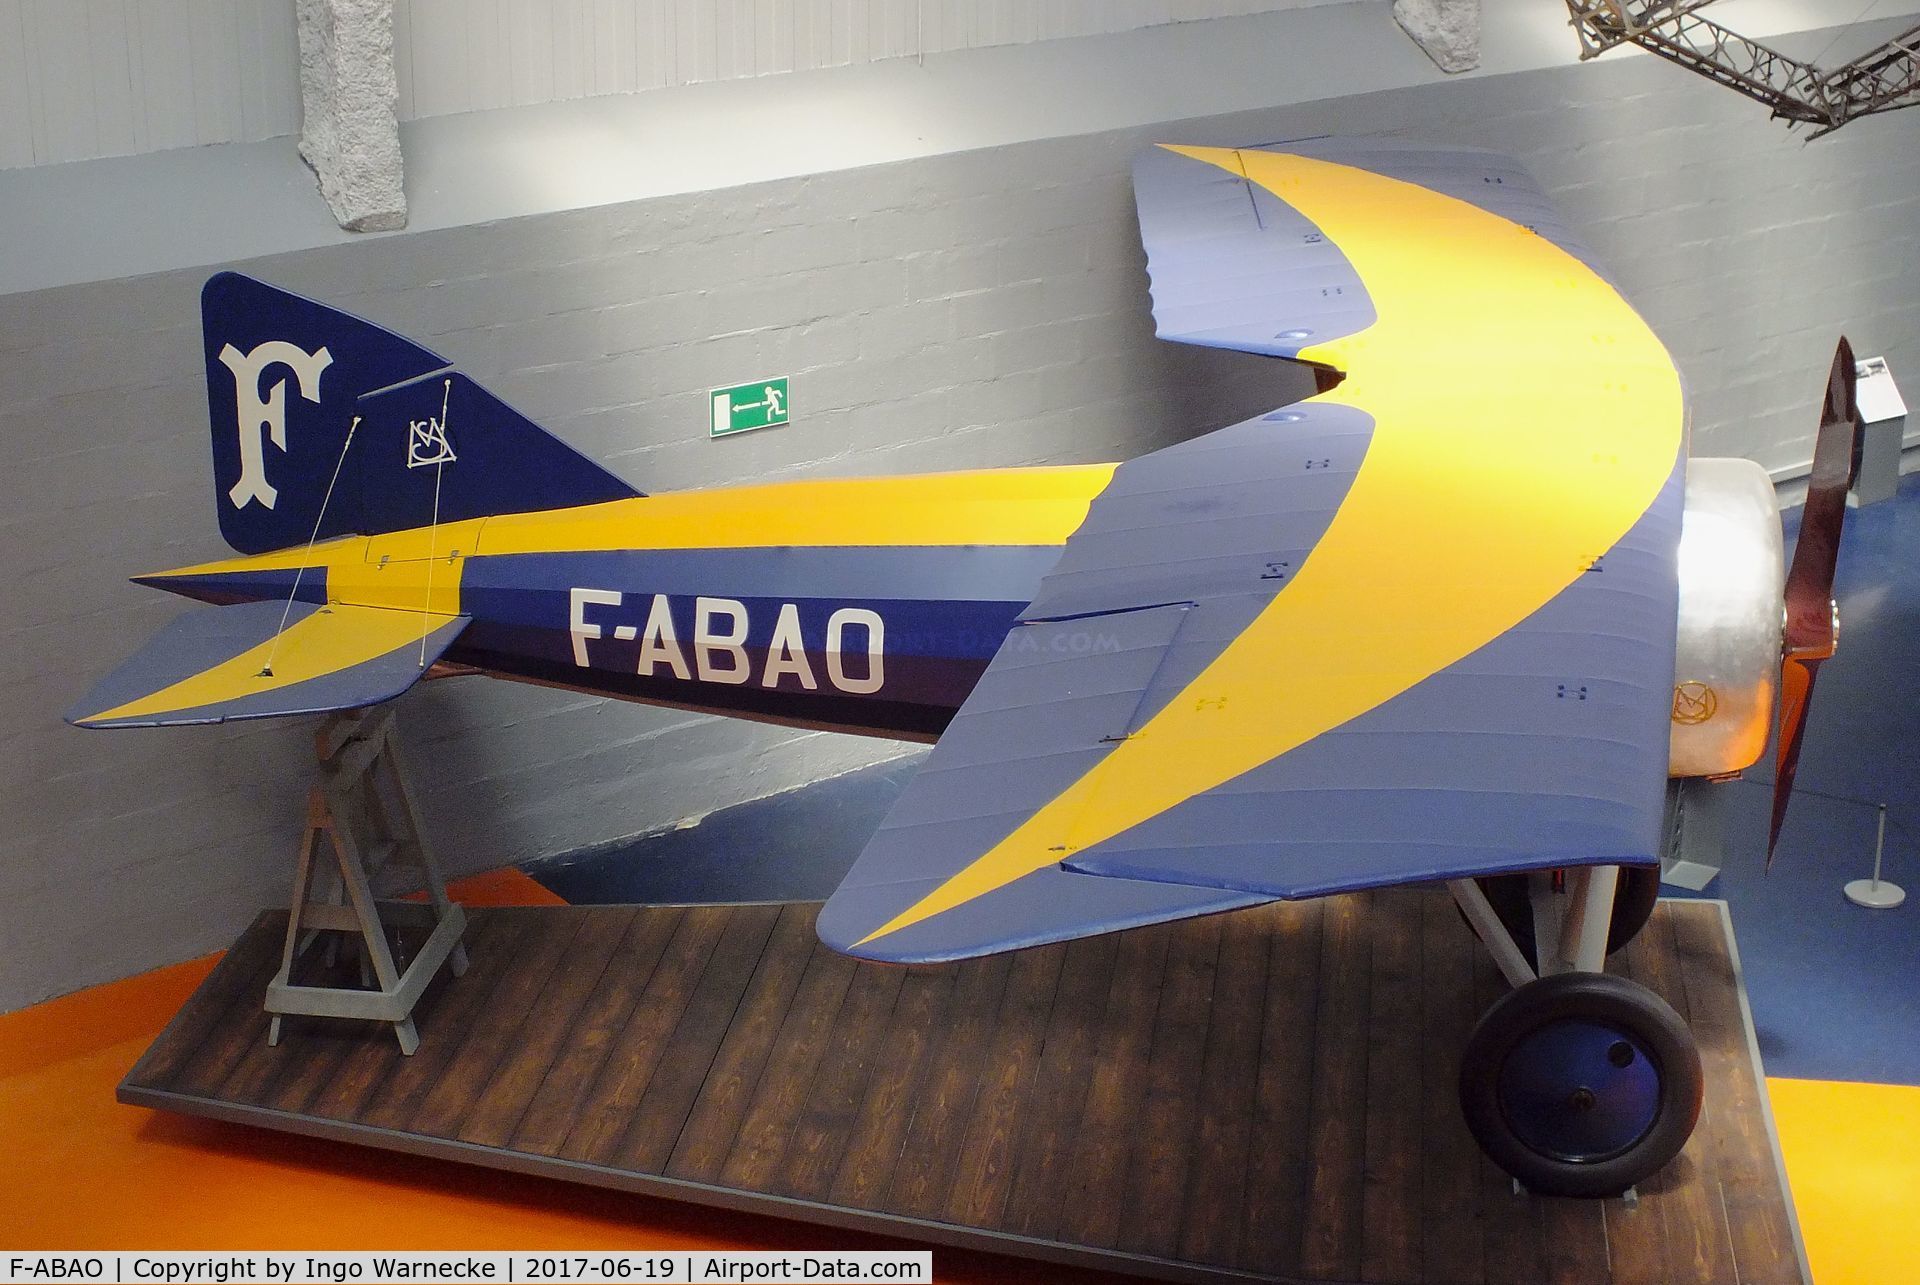 F-ABAO, Morane-Saulnier MS AI C/N 2283, Morane-Saulnier A1 at the Musee de l'Air, Paris/Le Bourget